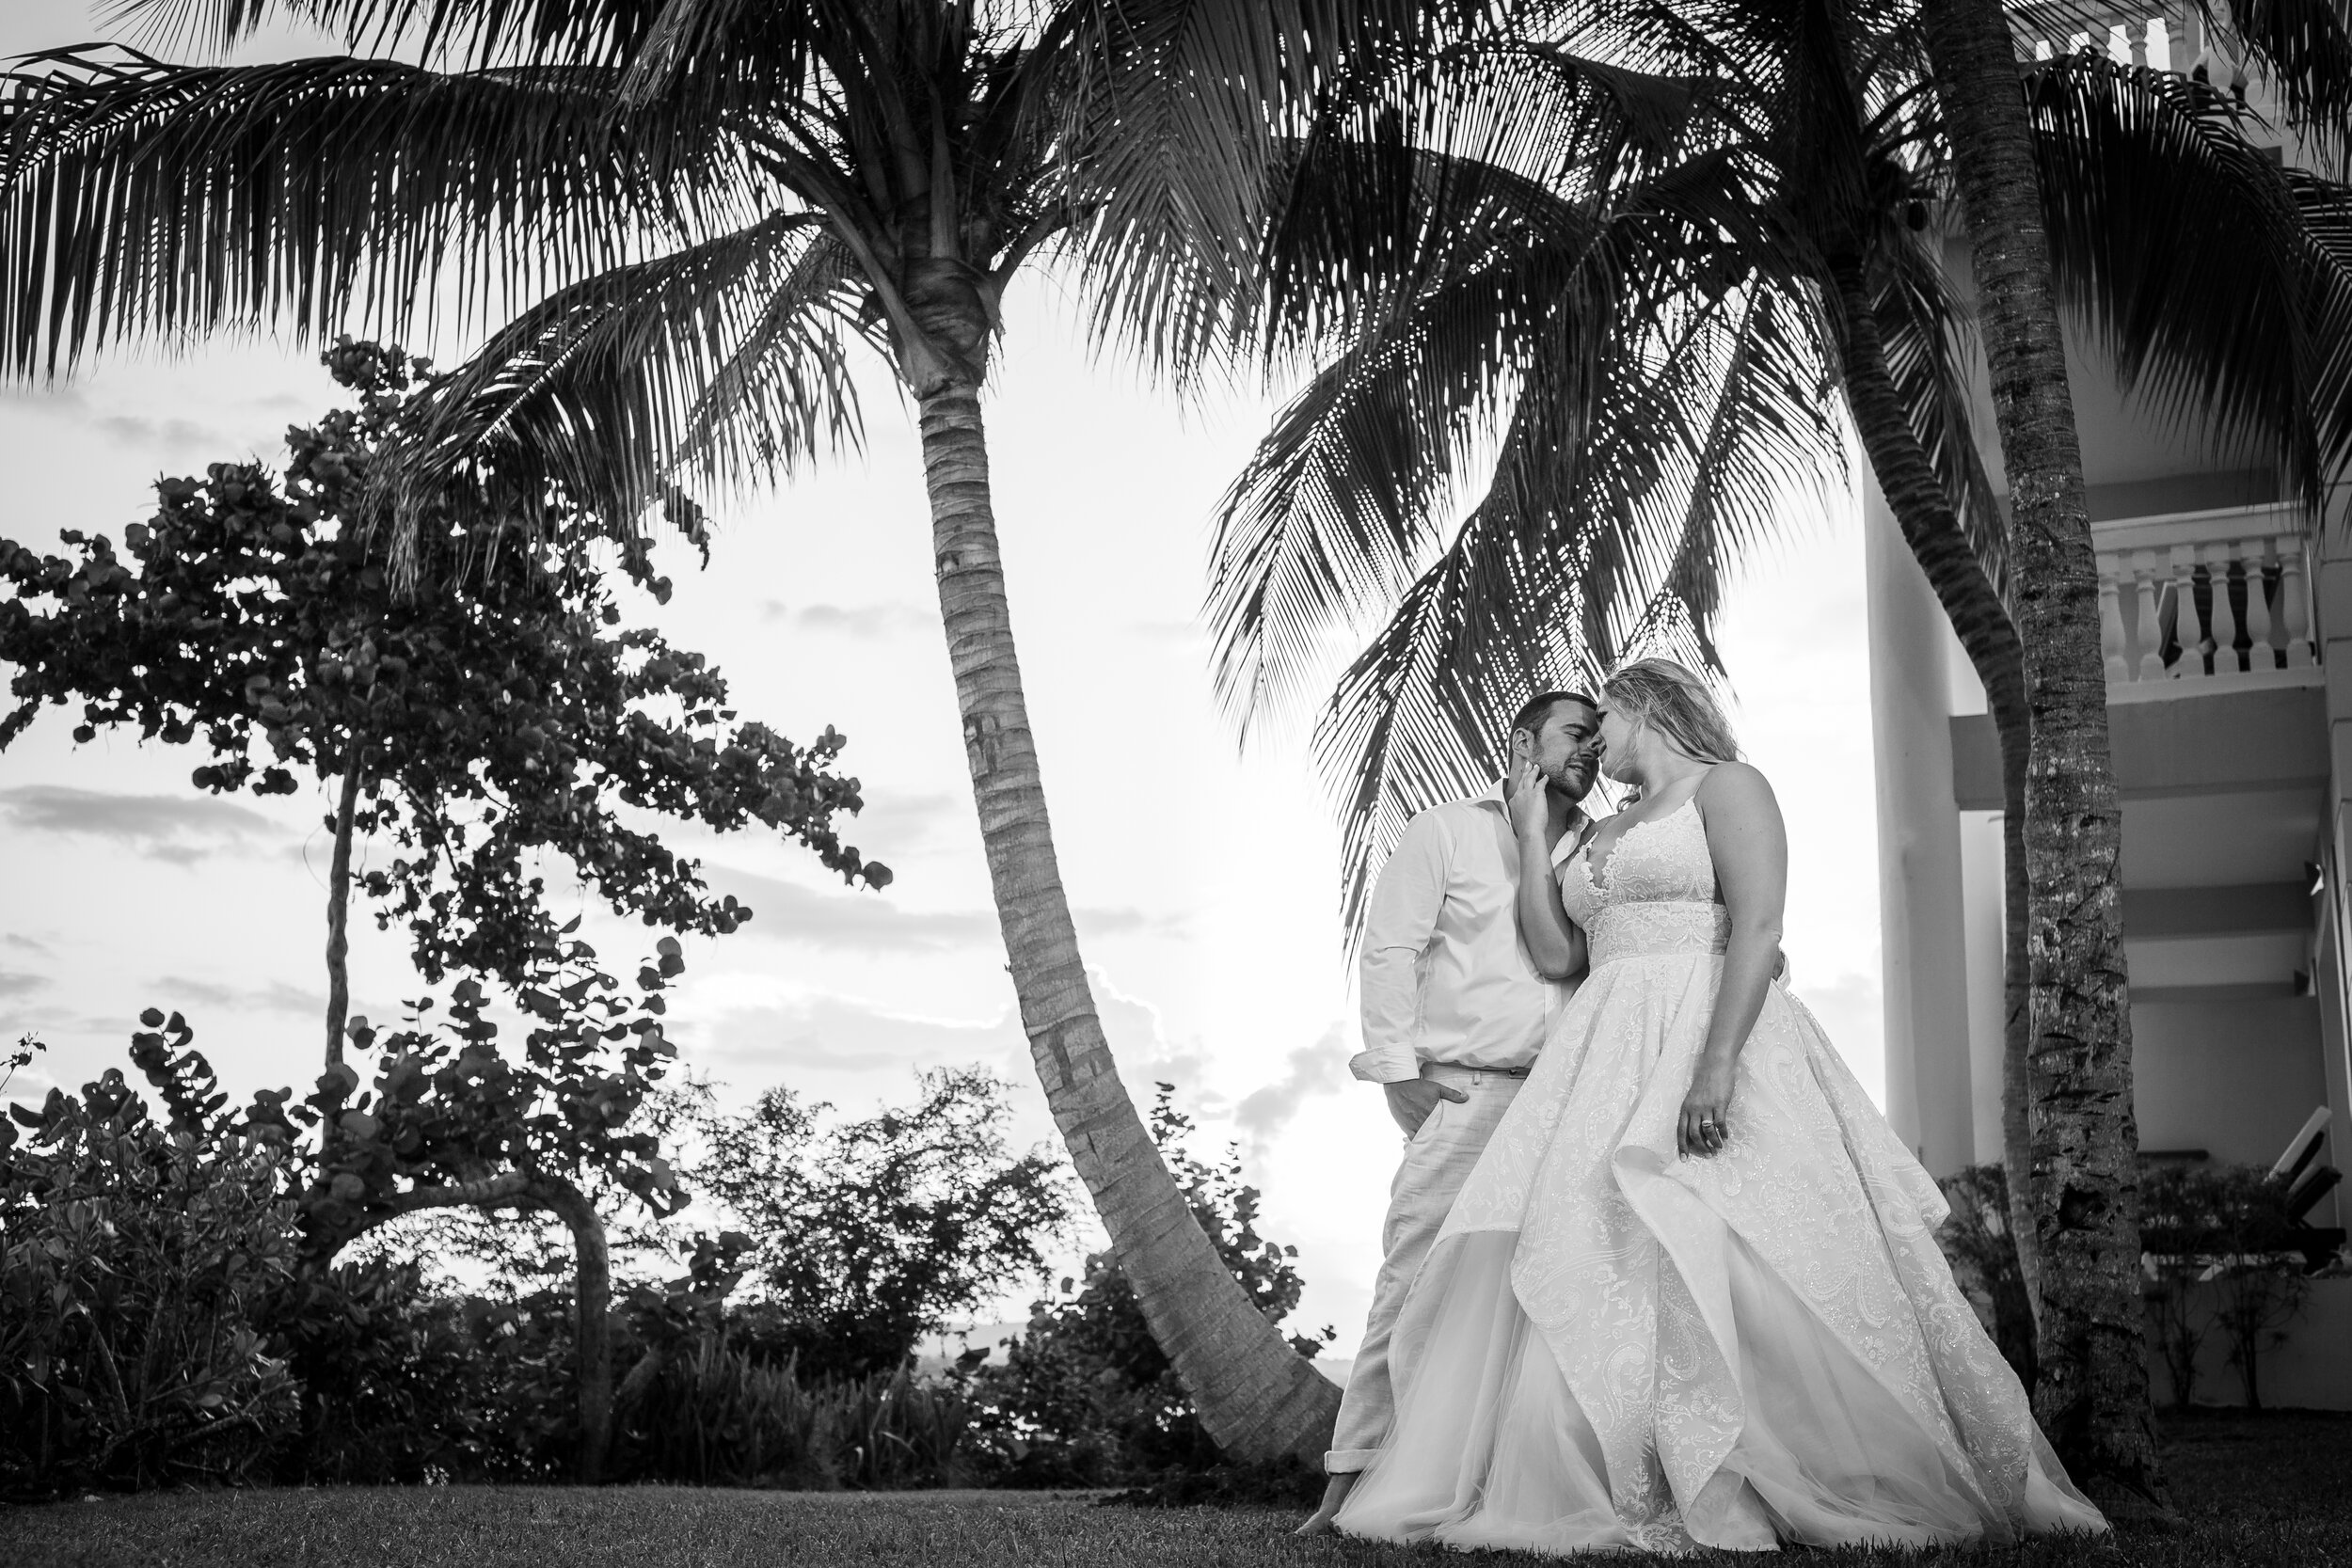 Tropical wedding photo ideas